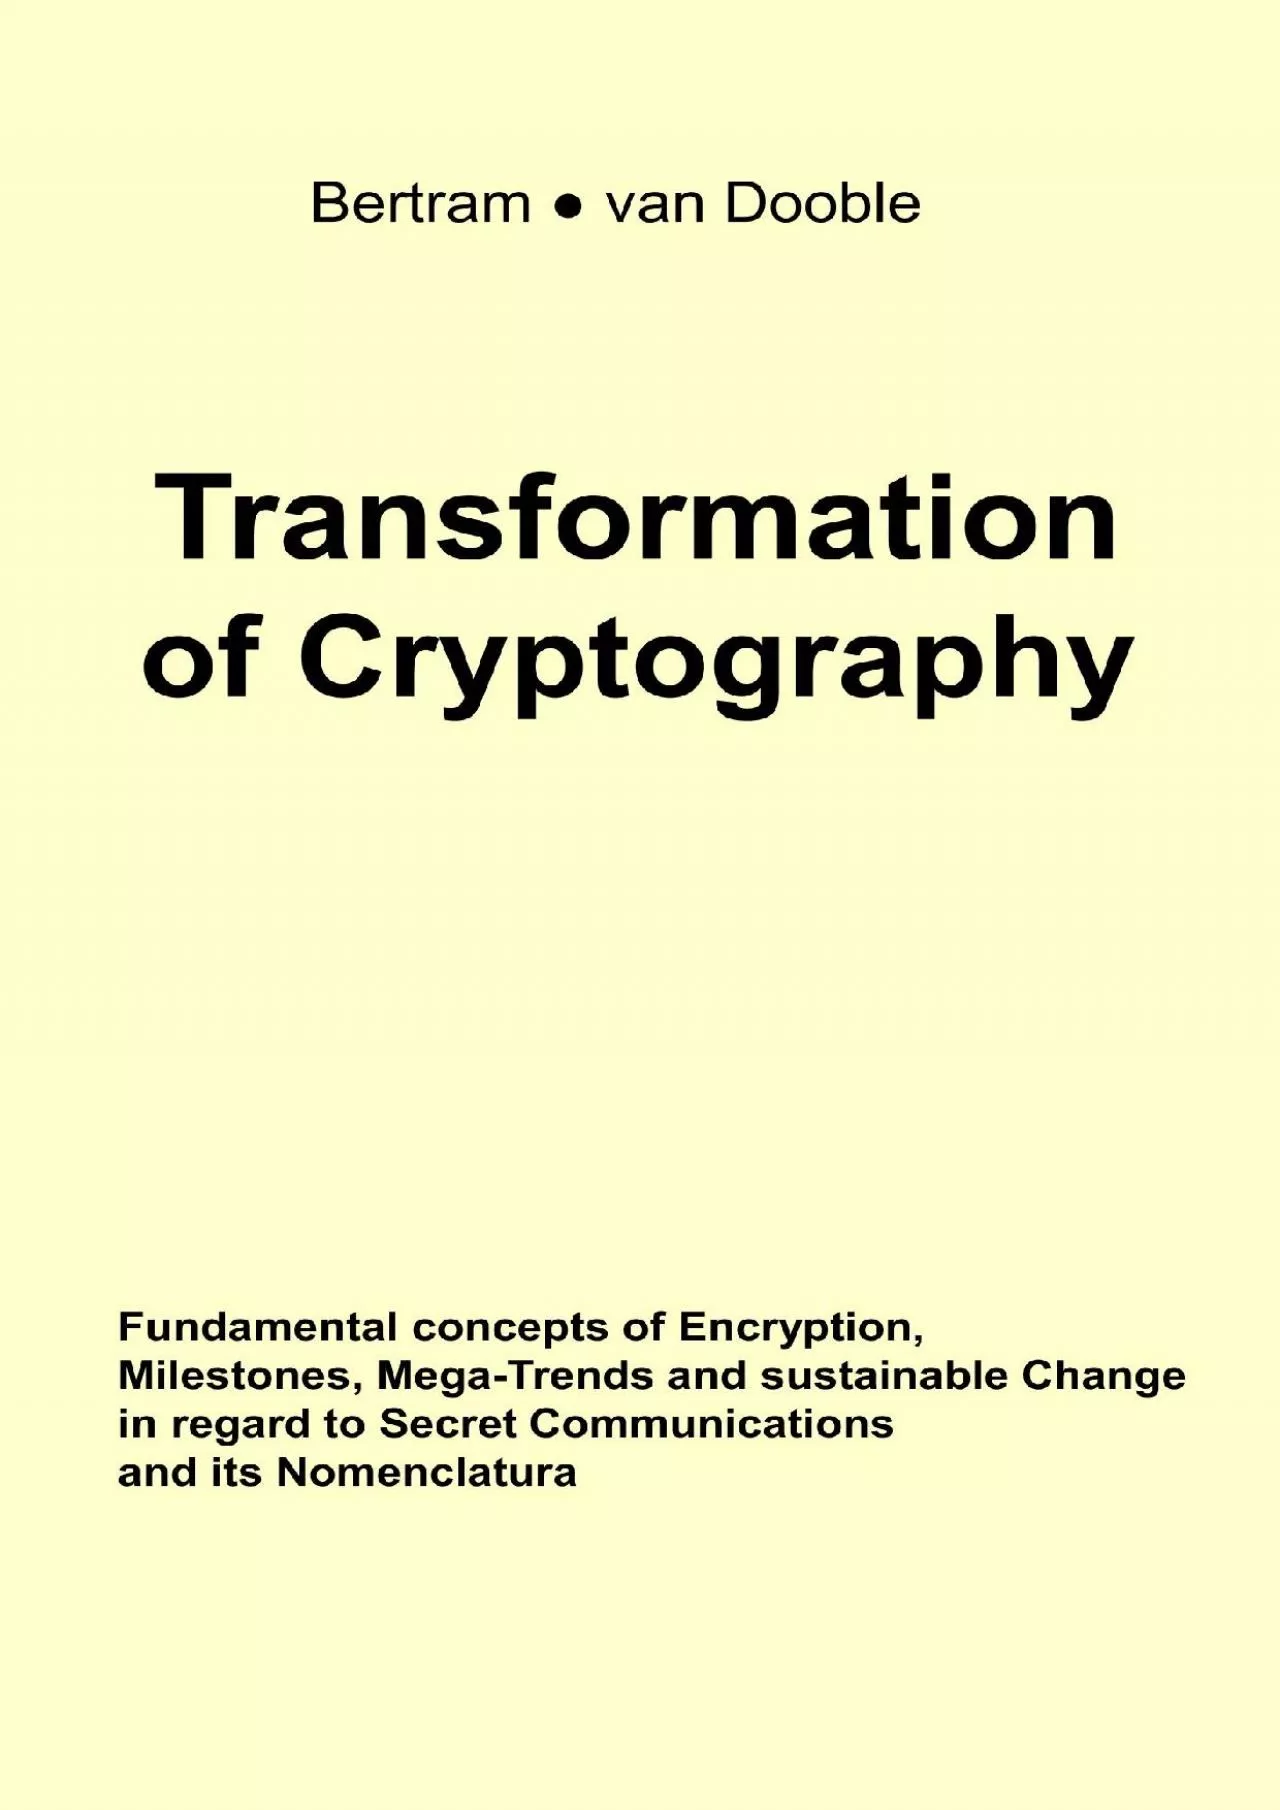 (BOOS)-Transformation of Cryptography: Fundamental concepts of Encryption, Milestones,